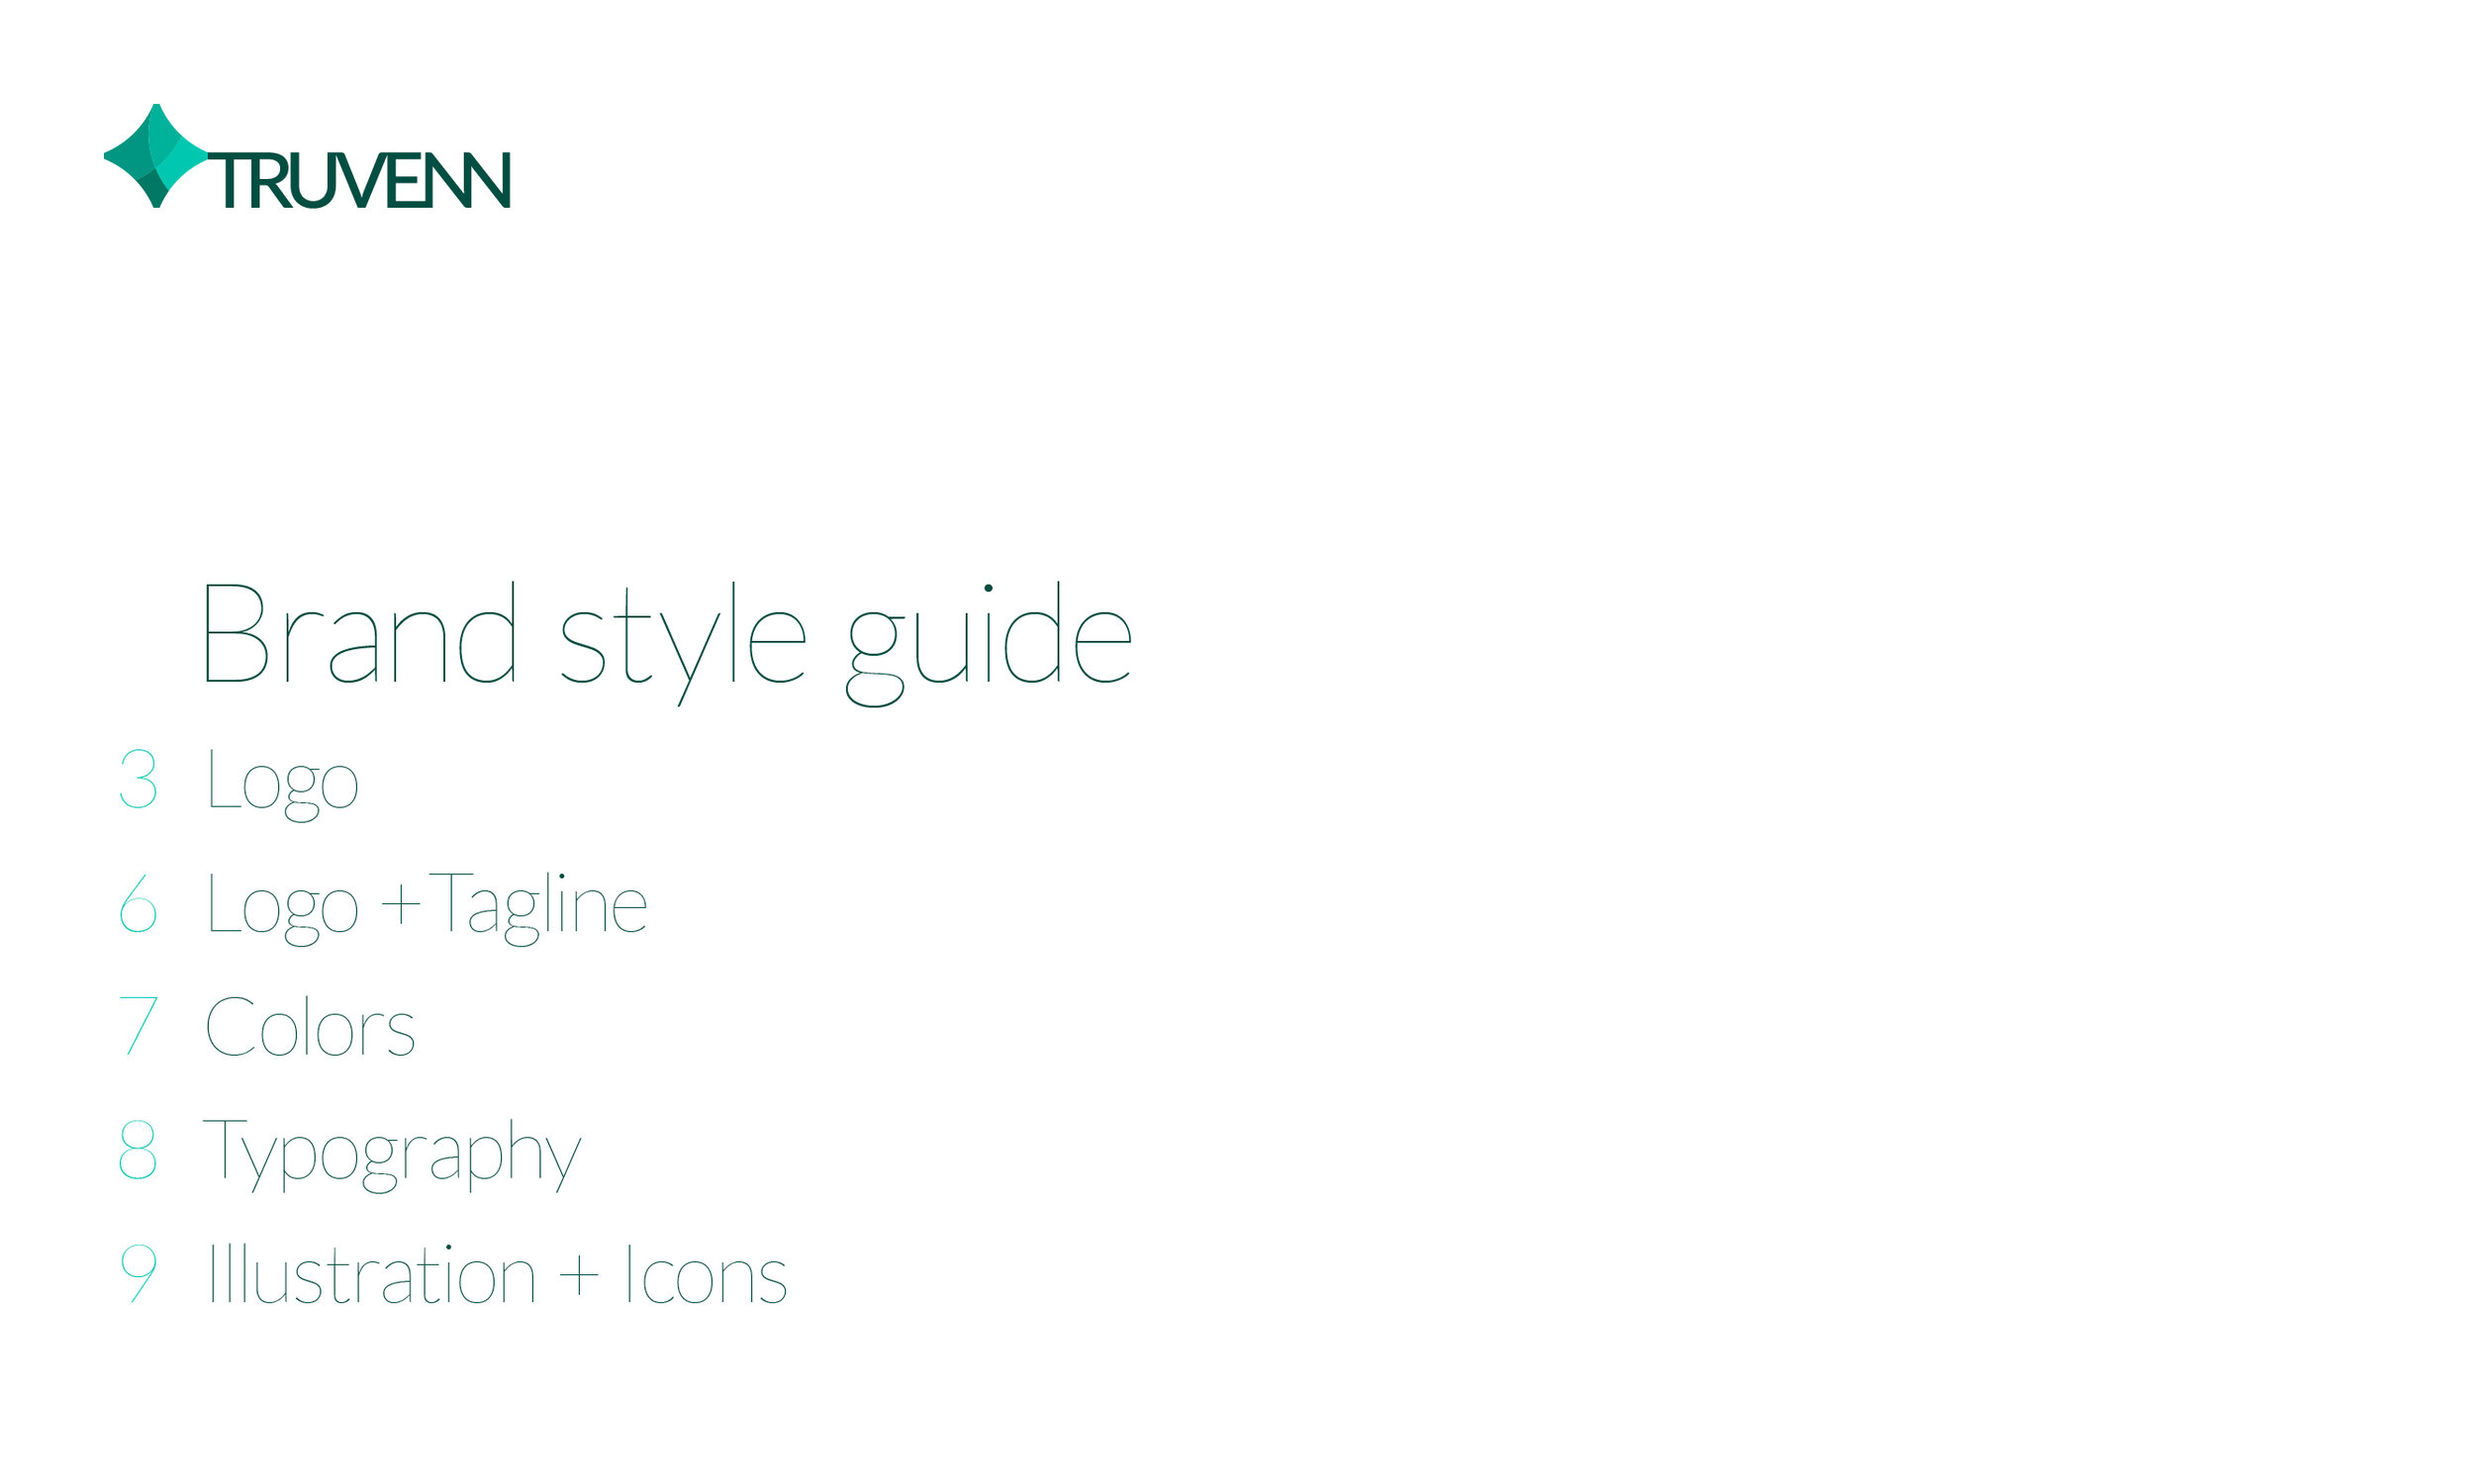 Truvenn_Brand style guide.jpg